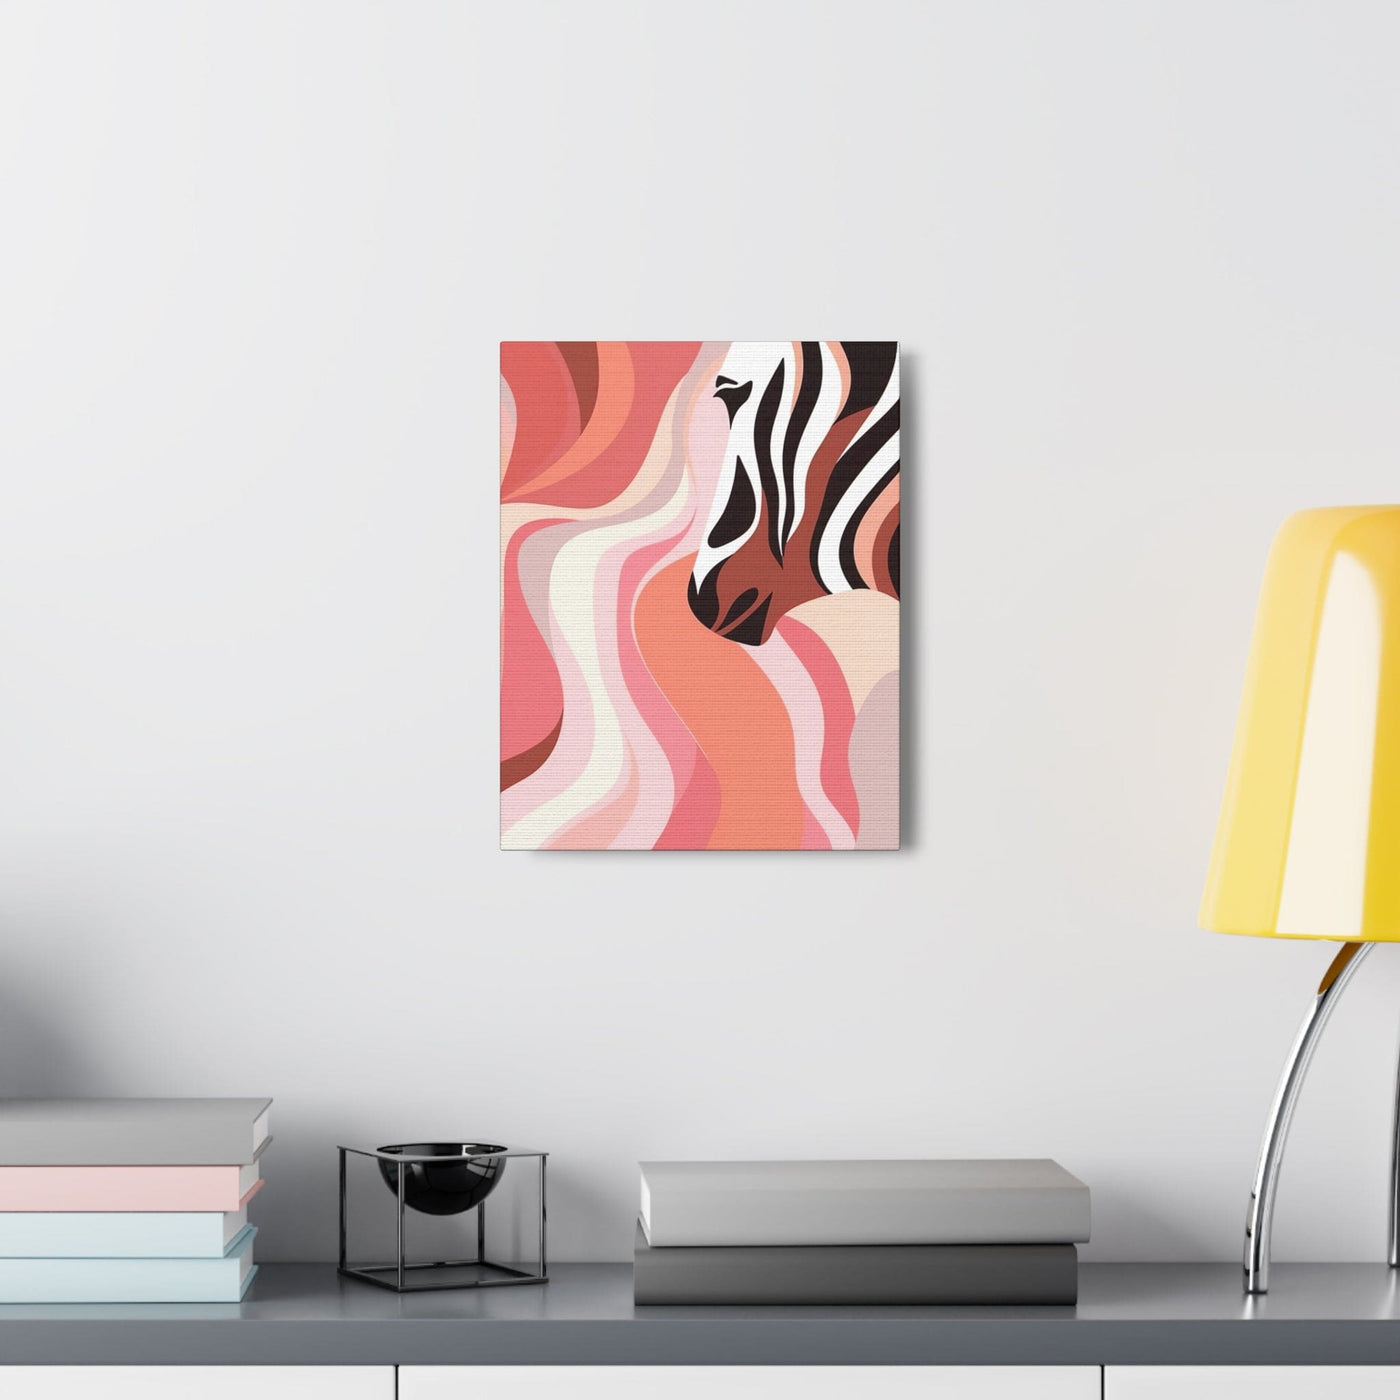 Wall Art Decor Canvas Print Artwork Boho Pink And White Contemporary Art Lines